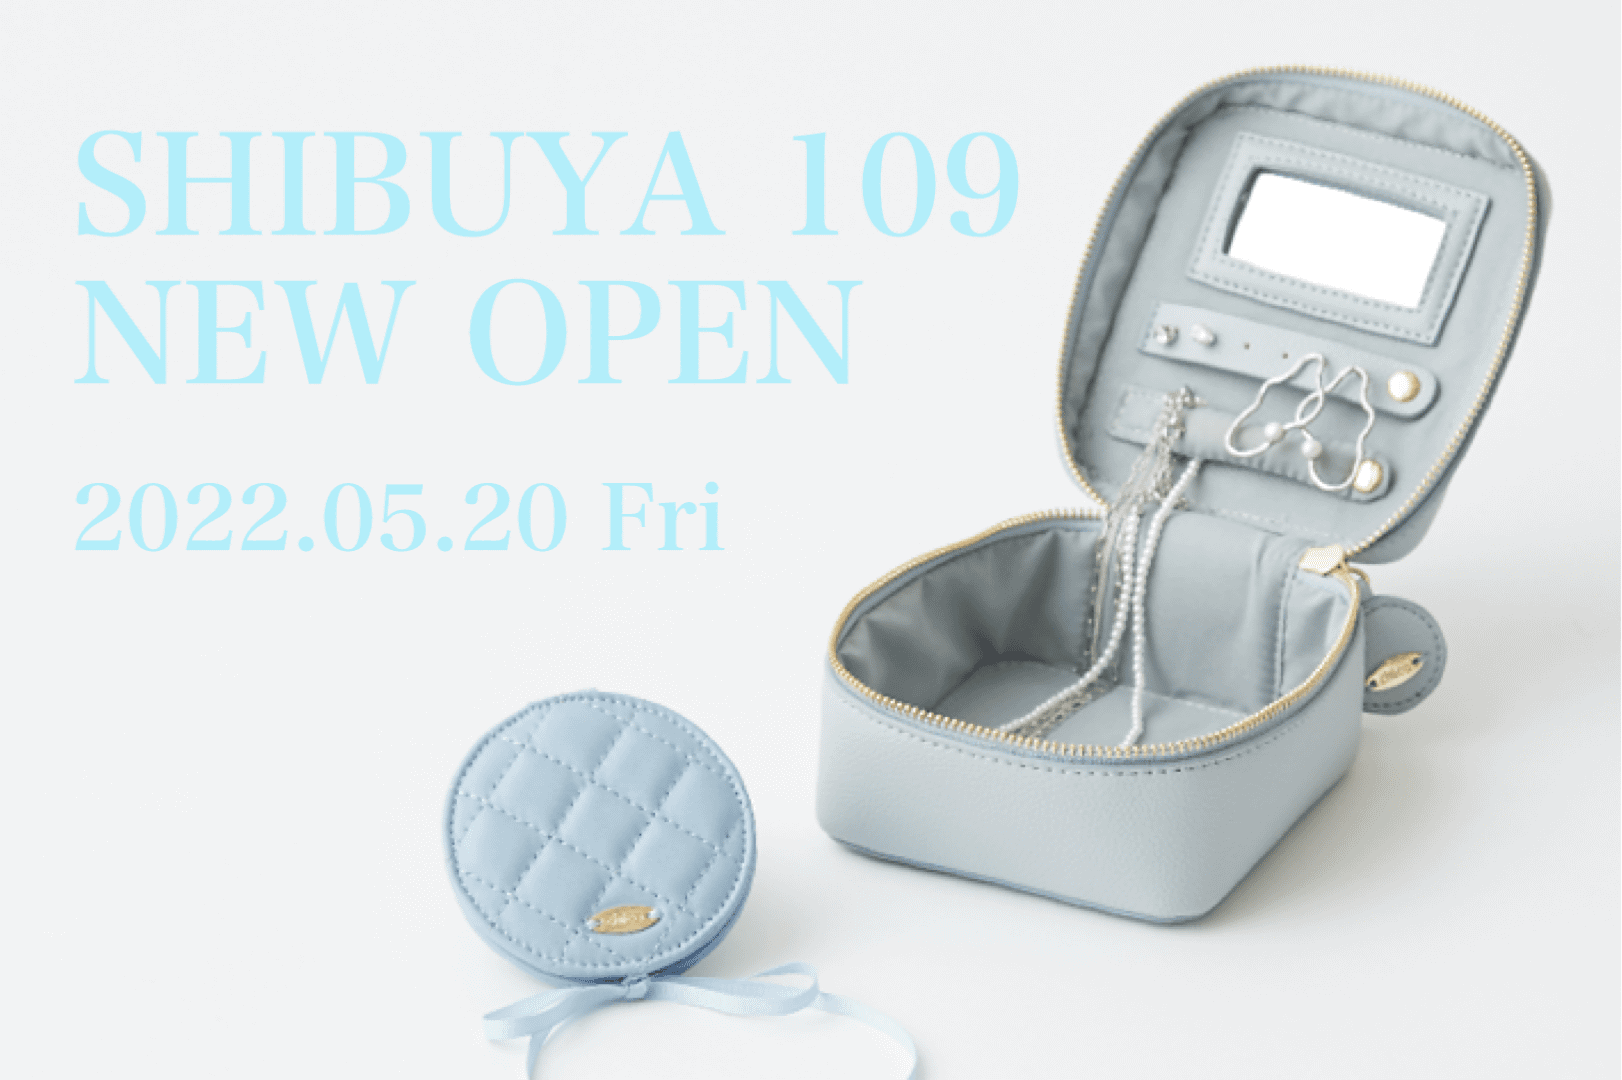 Chico 【 NEW OPEN】Chico 渋谷109店オープン初日のイベントをおさらい！